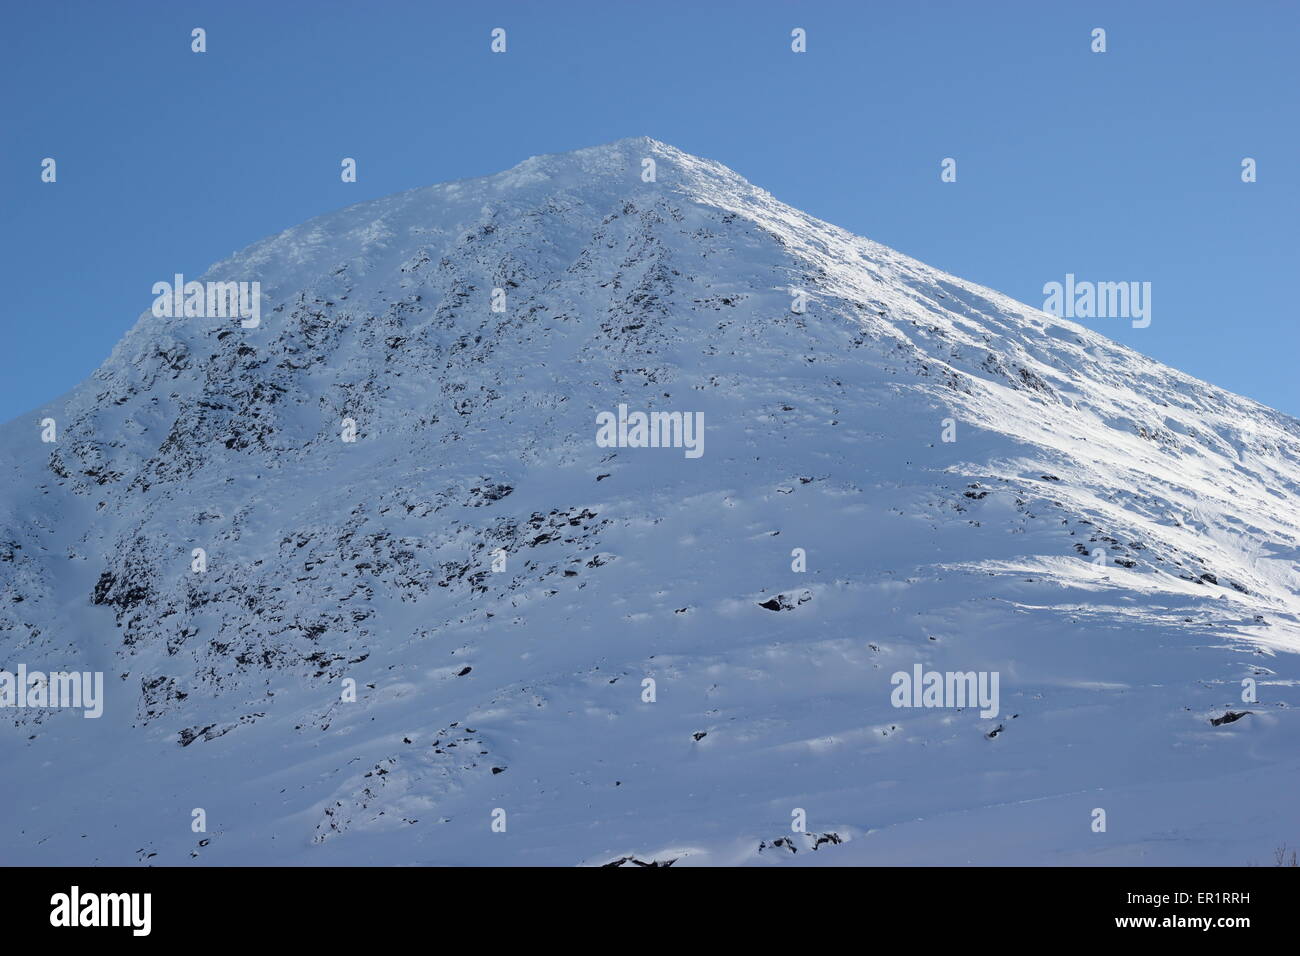 Coperta di neve montagna, Dapmotjavri, Norvegia Foto Stock